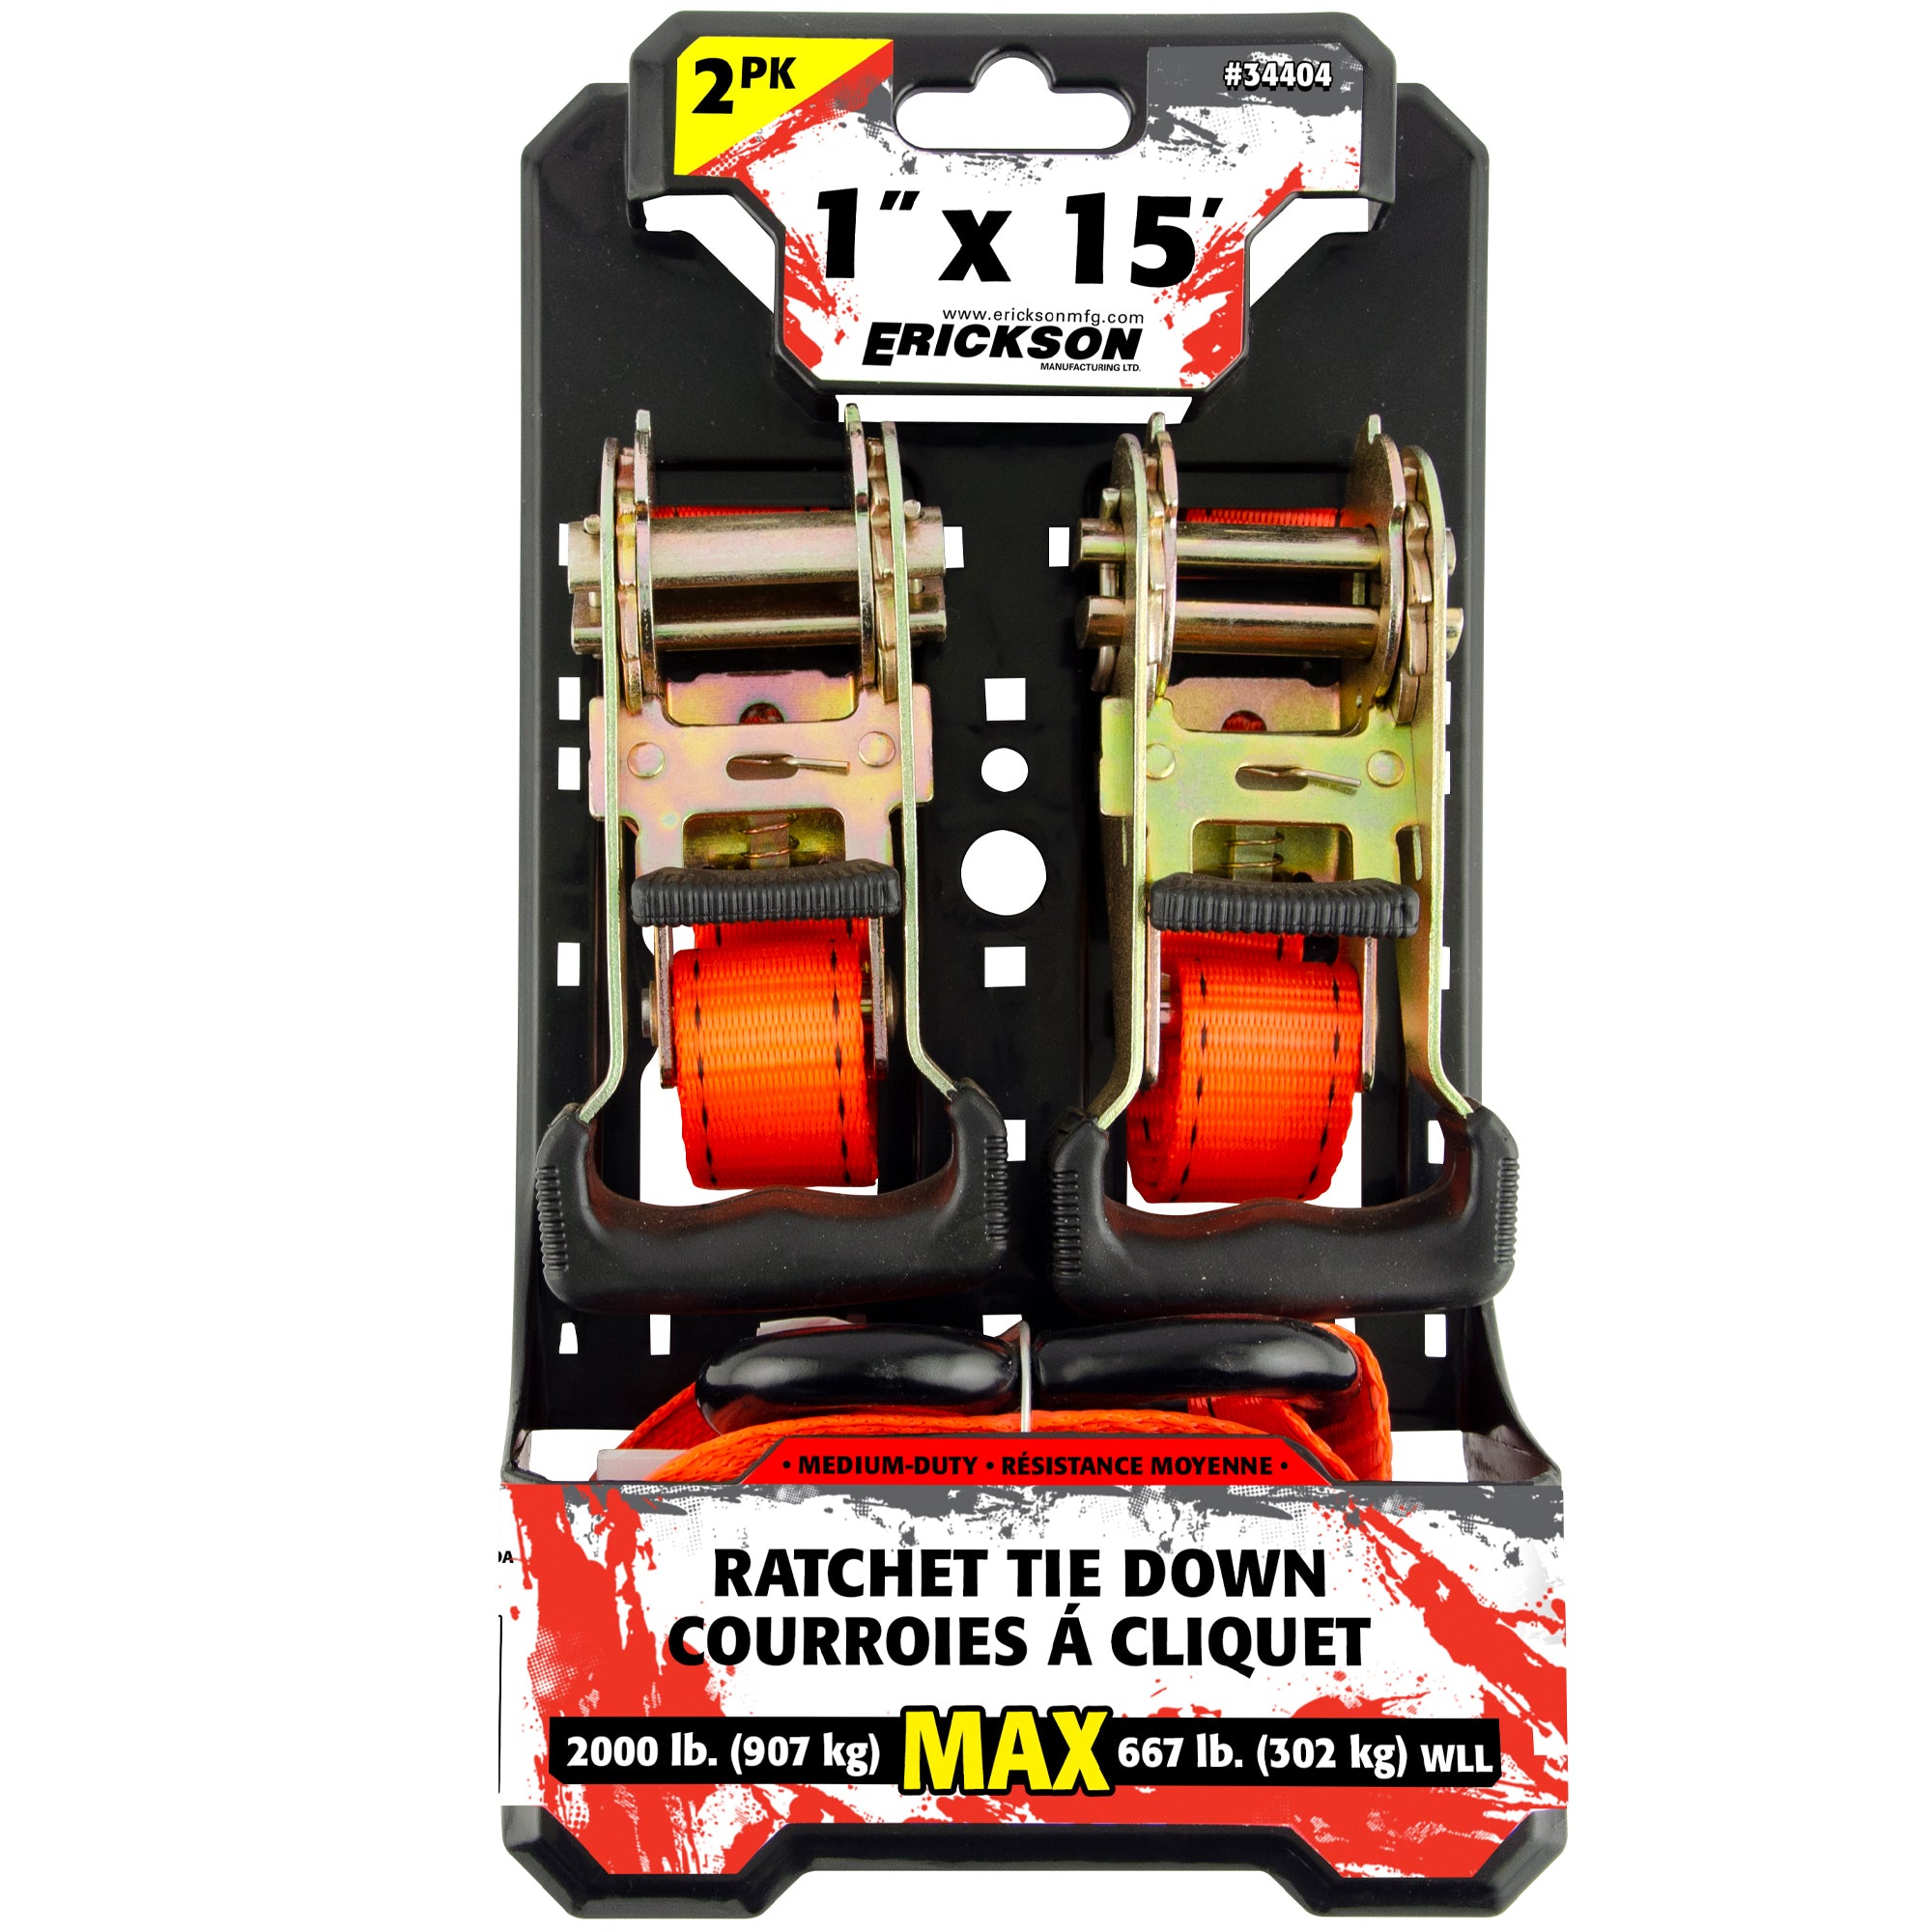 Ratchet Tie Down Straps 1"x15' 2000 lb Load Rating 2 Pack 15'